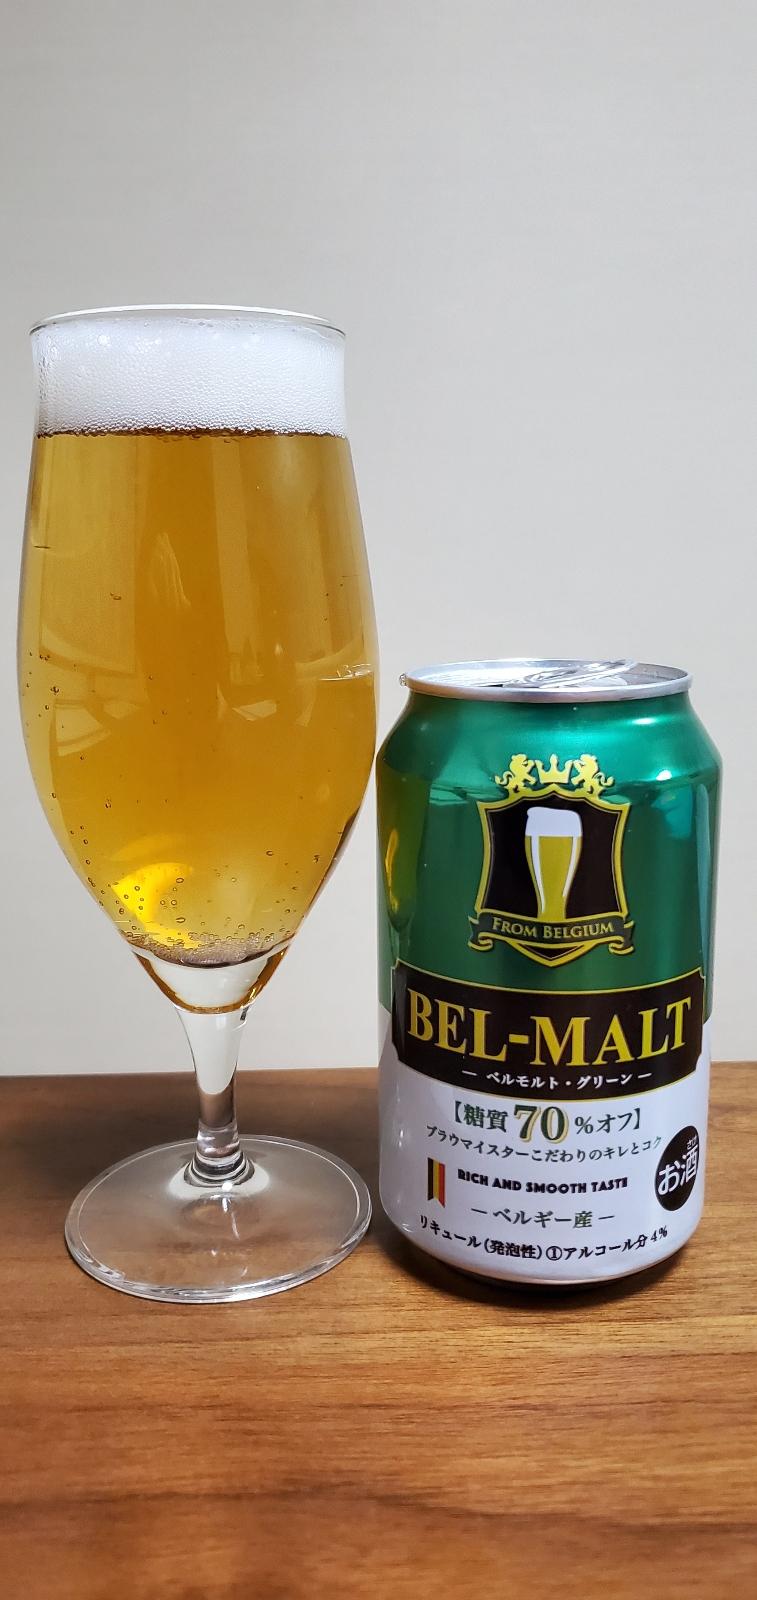 Bel-Malt Green